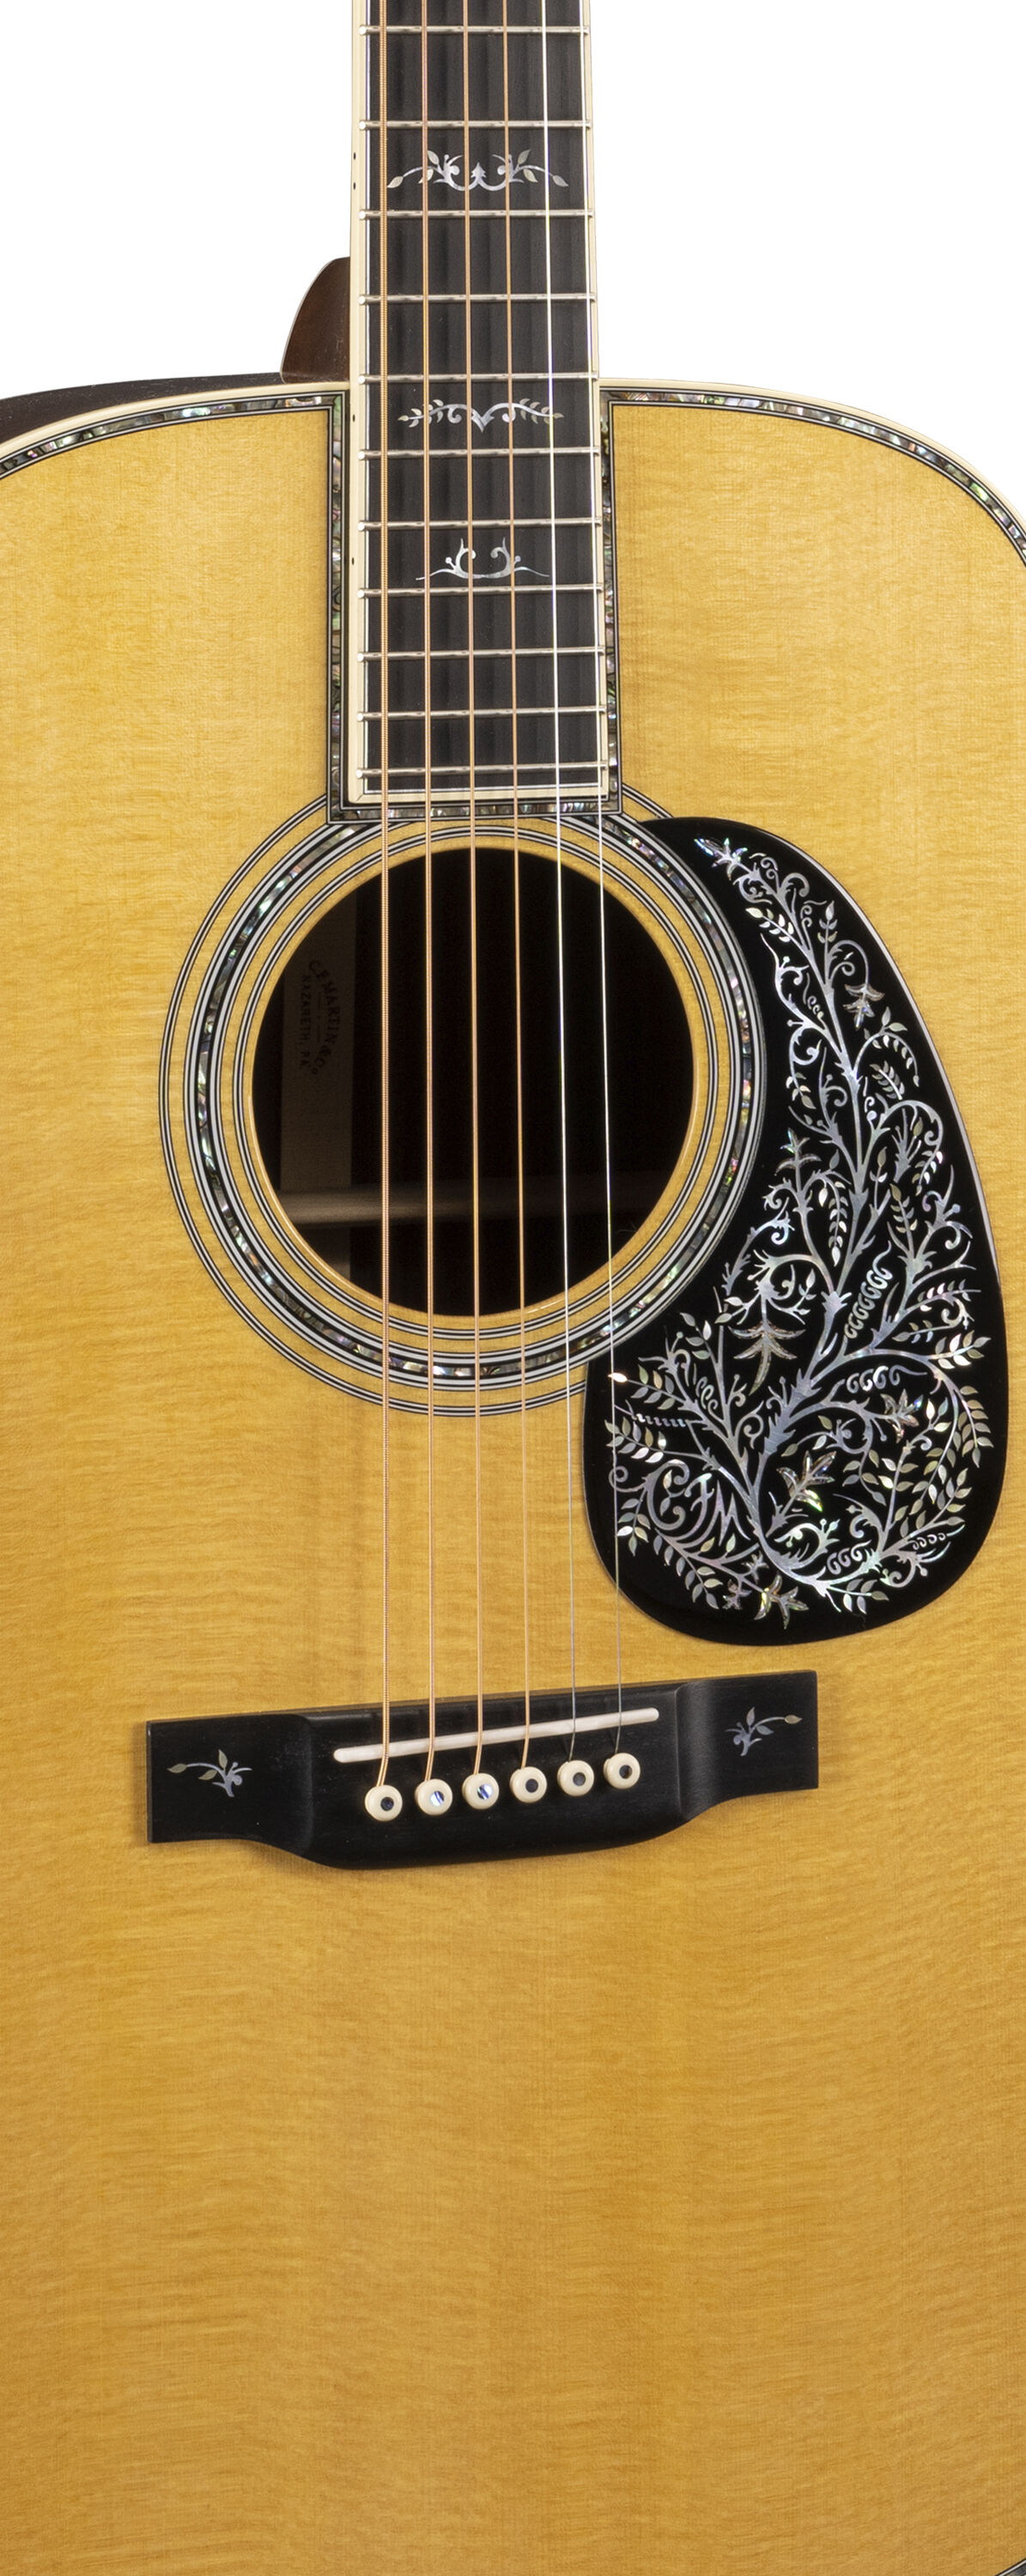 Martin D-42 Special Acoustic Guitar | Martin Guitar